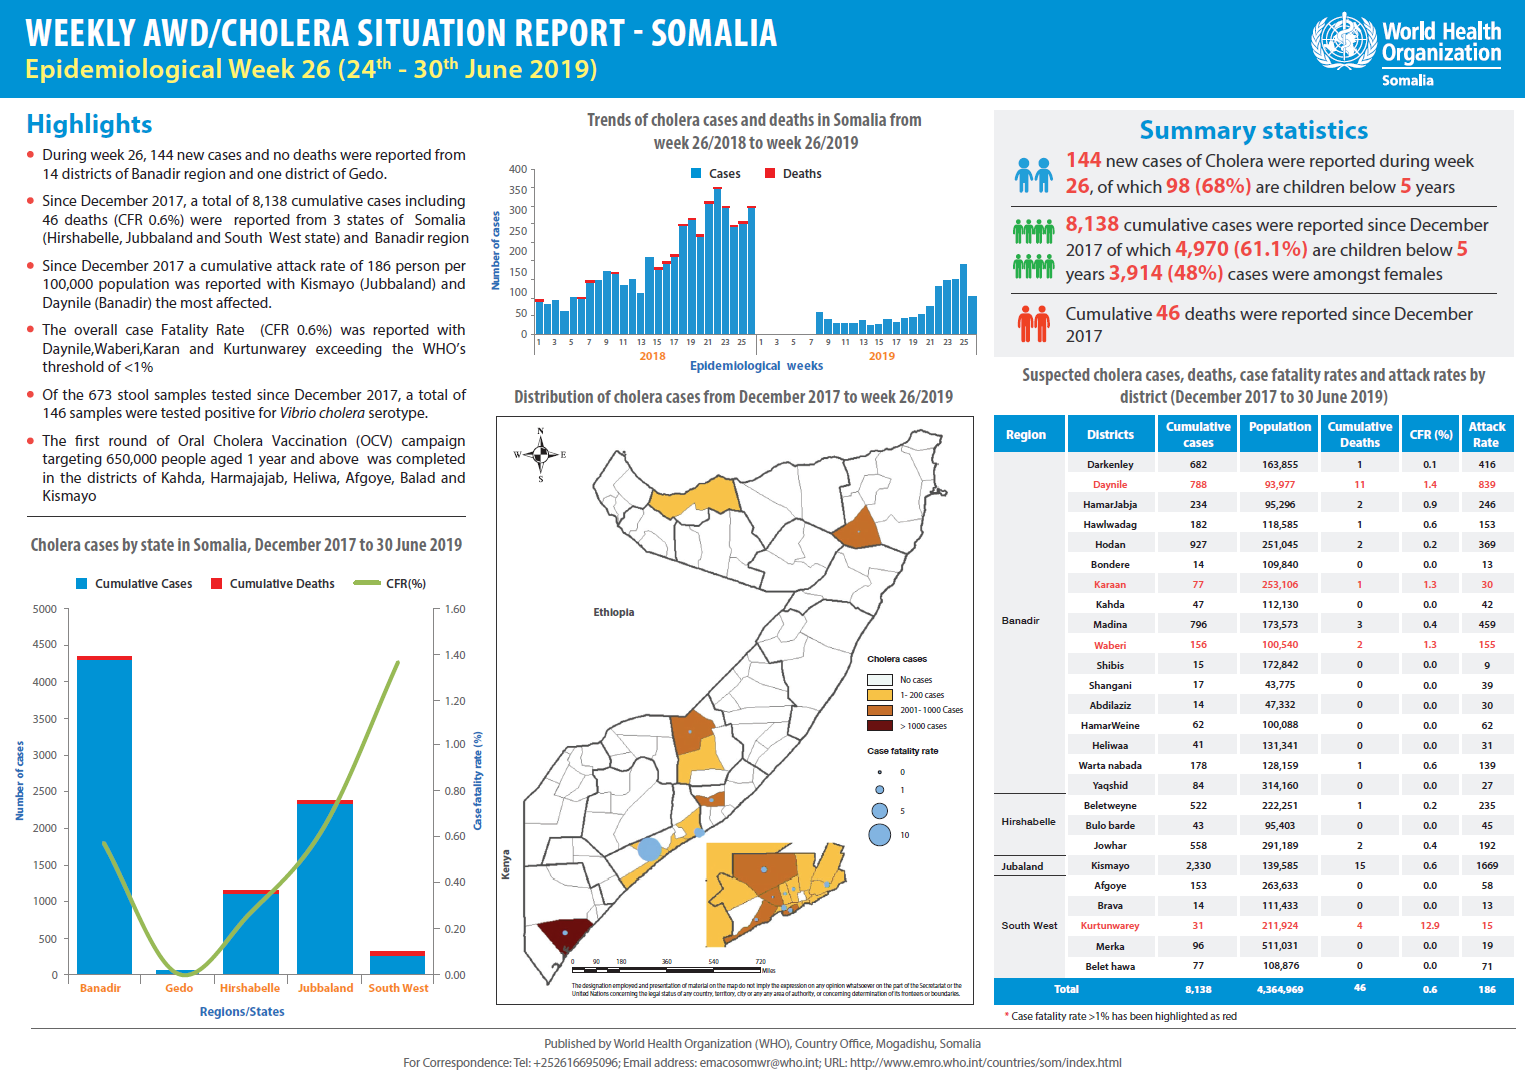 Outbreak update - Cholera in Somalia, 30 June 2019